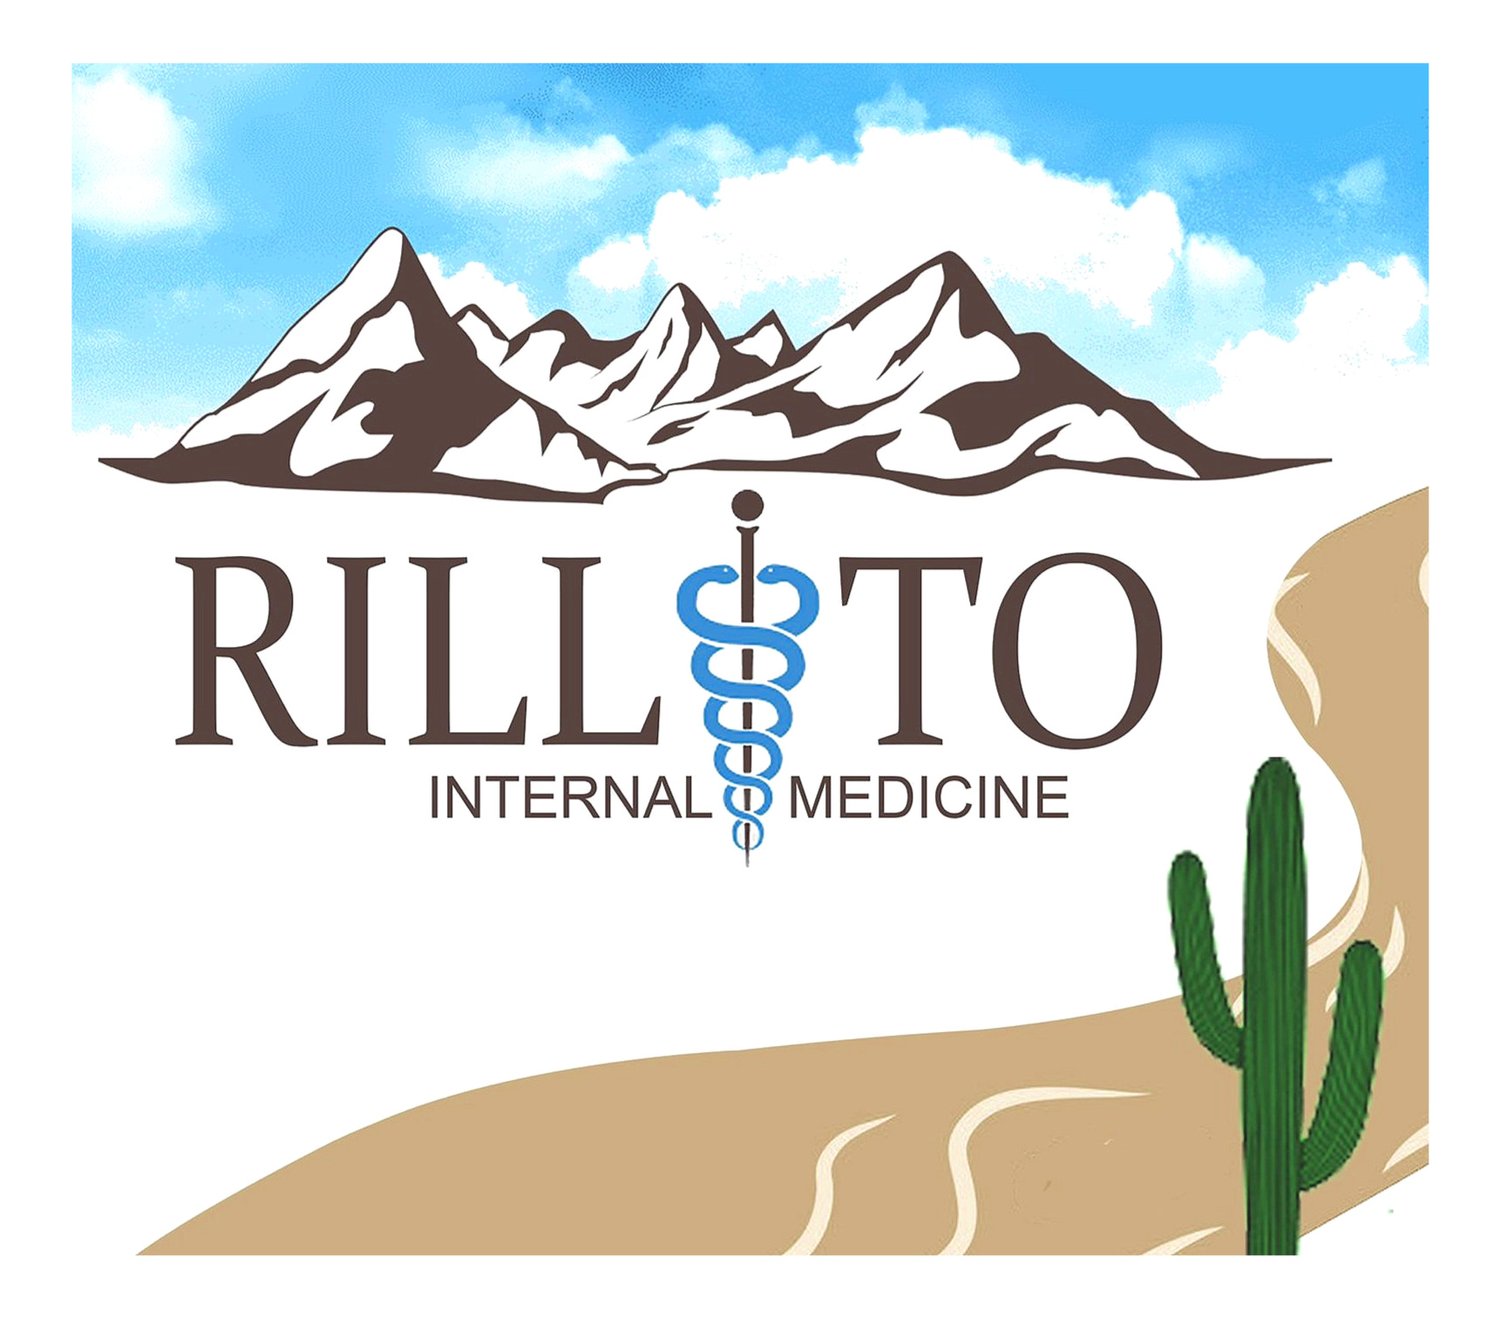 Rillito Internal Medicine